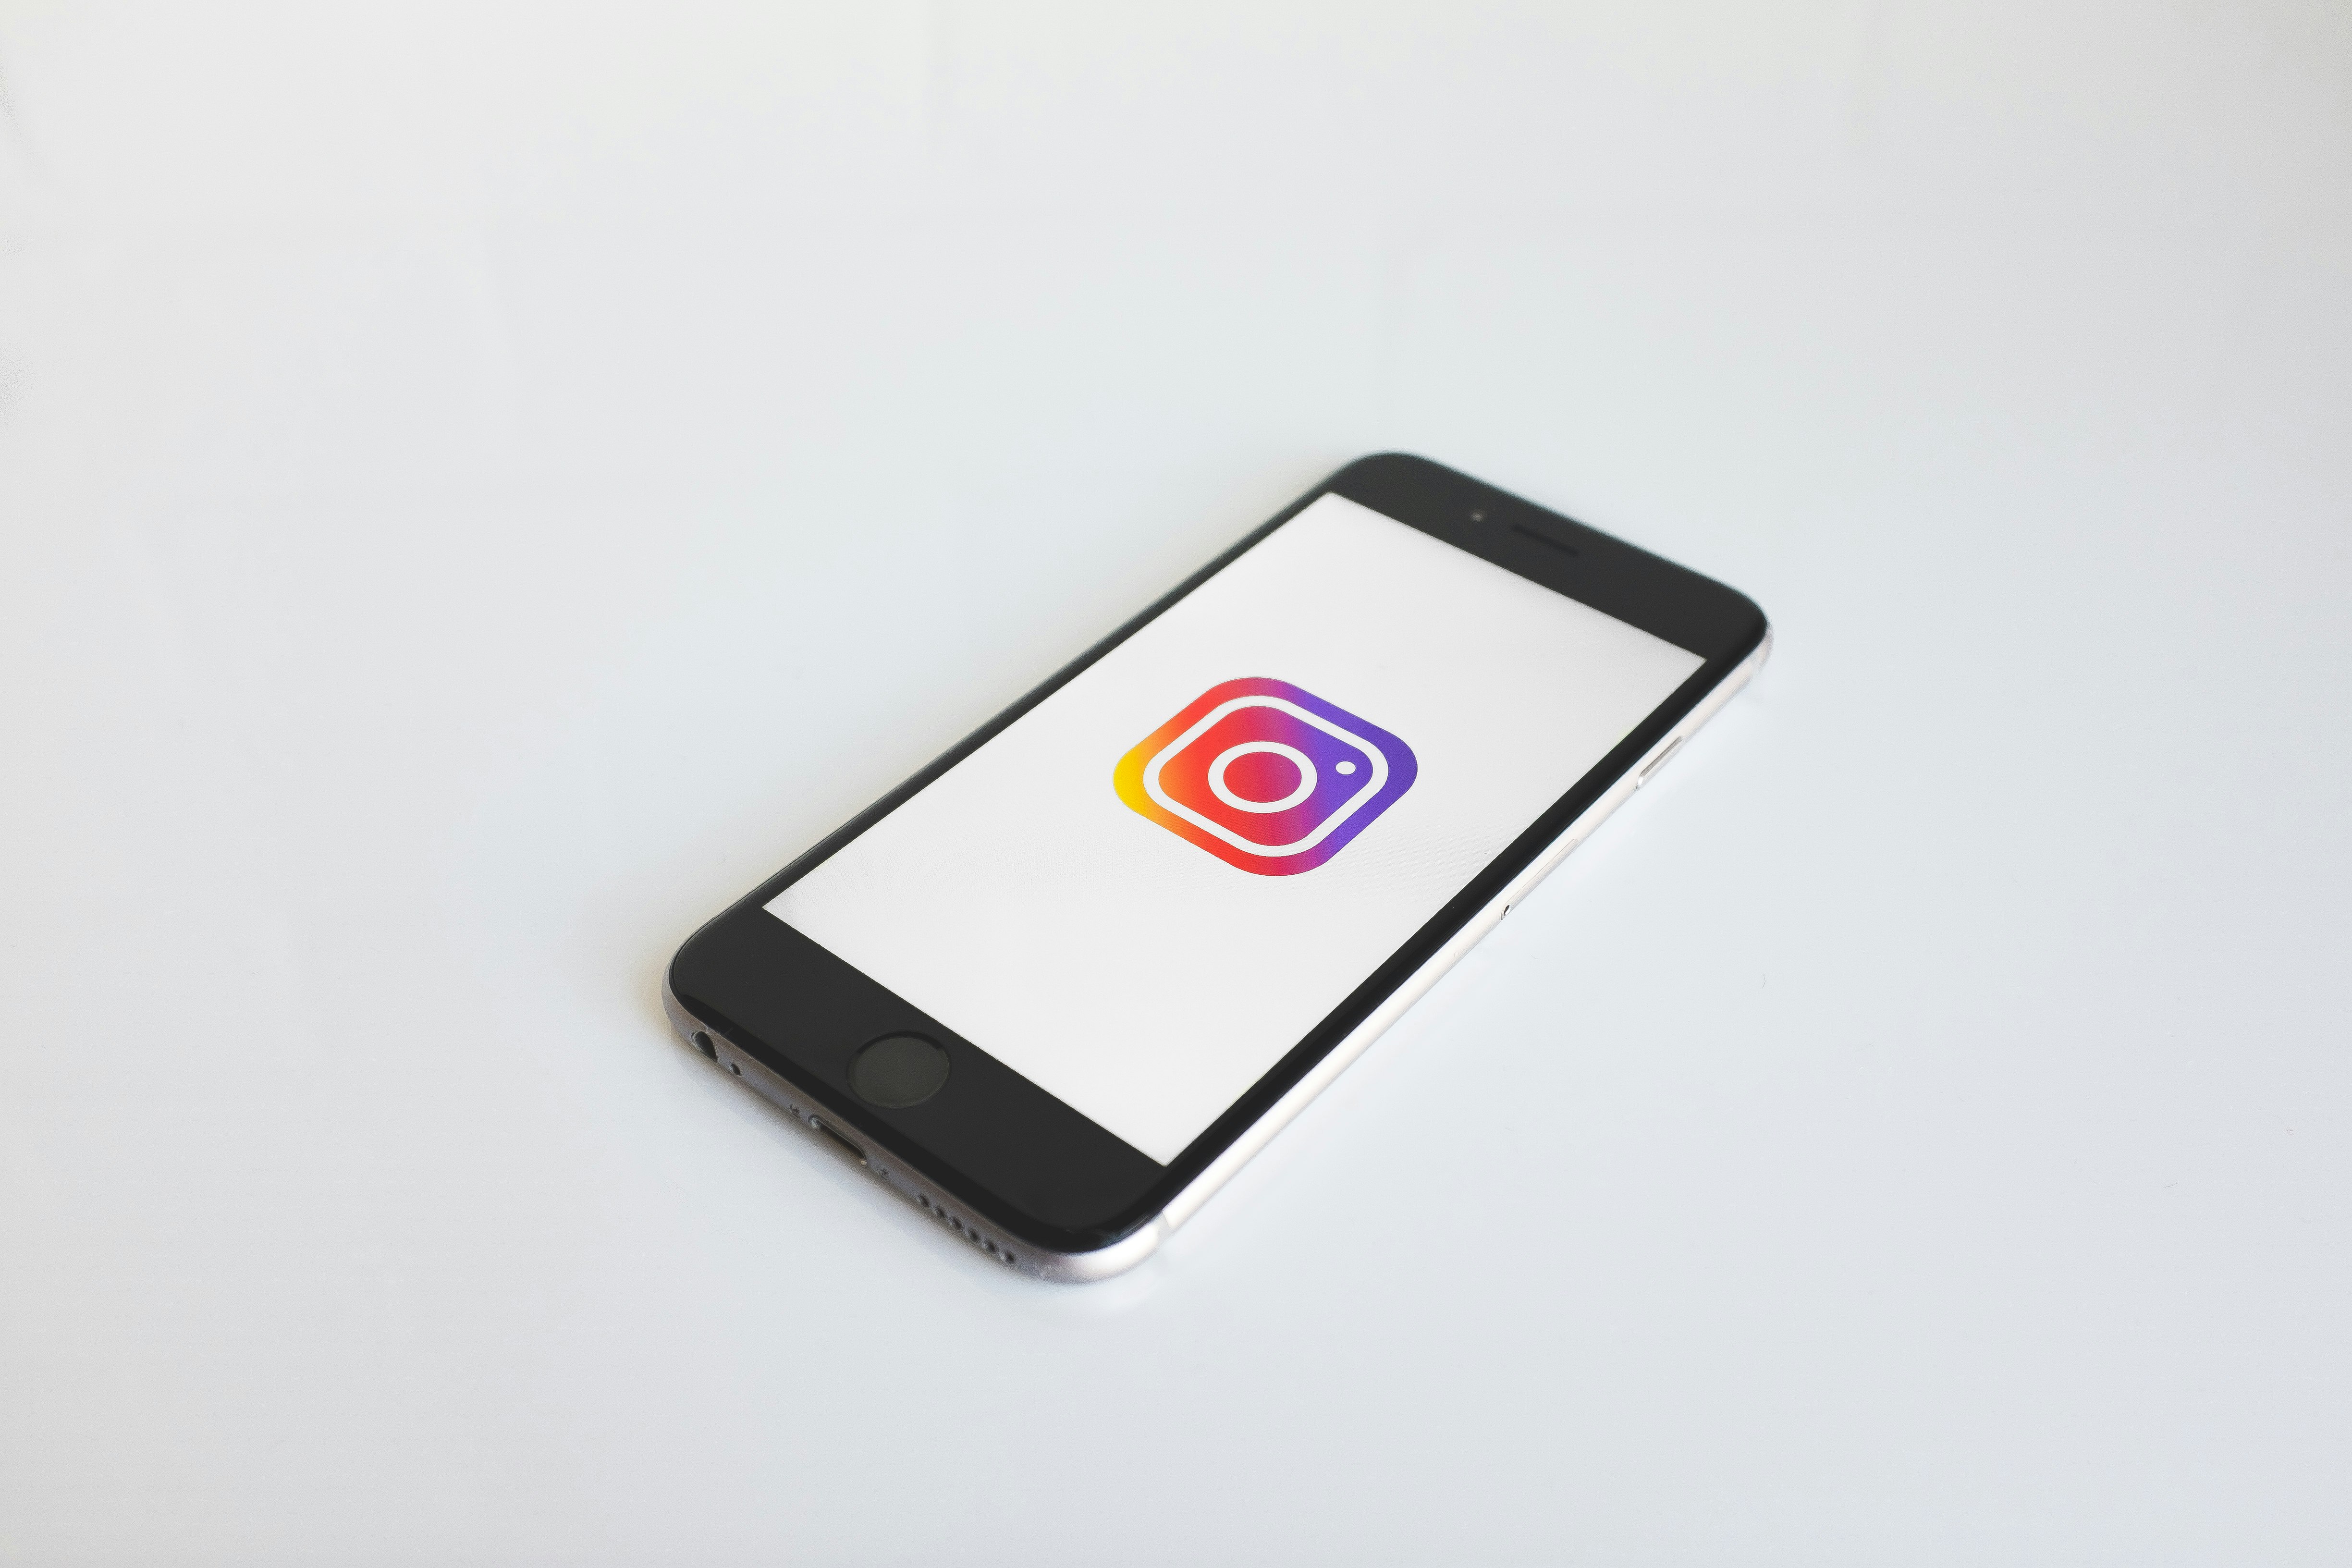 Instagram logo in space gray iPhone 6